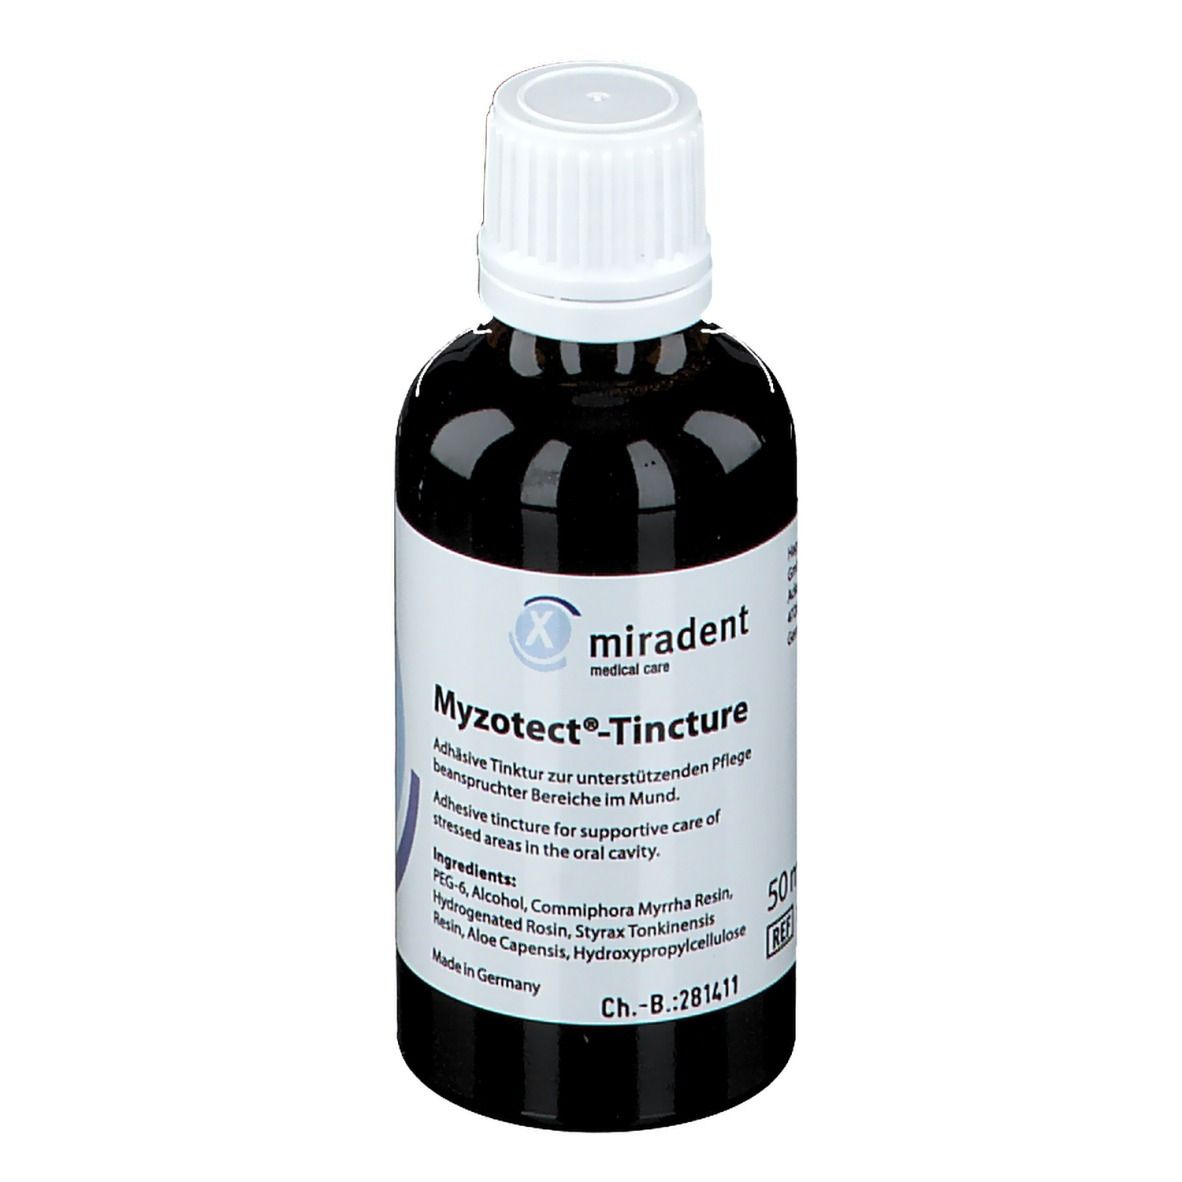 miradent Myzotect ®-Tincture